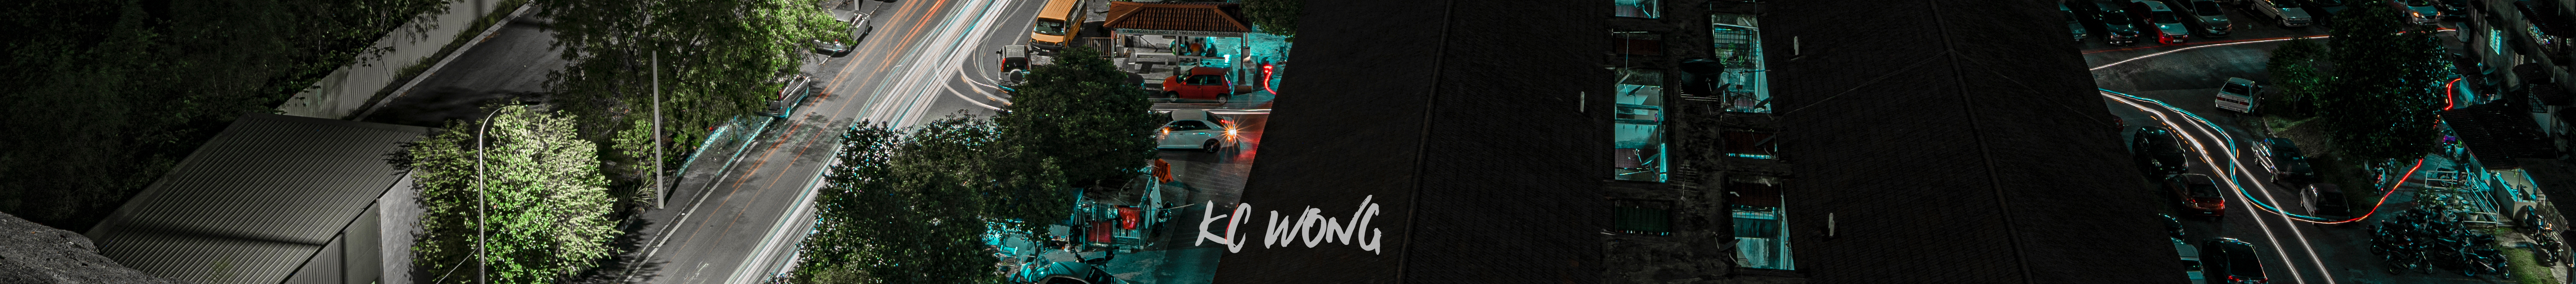 KC WONG's profile banner